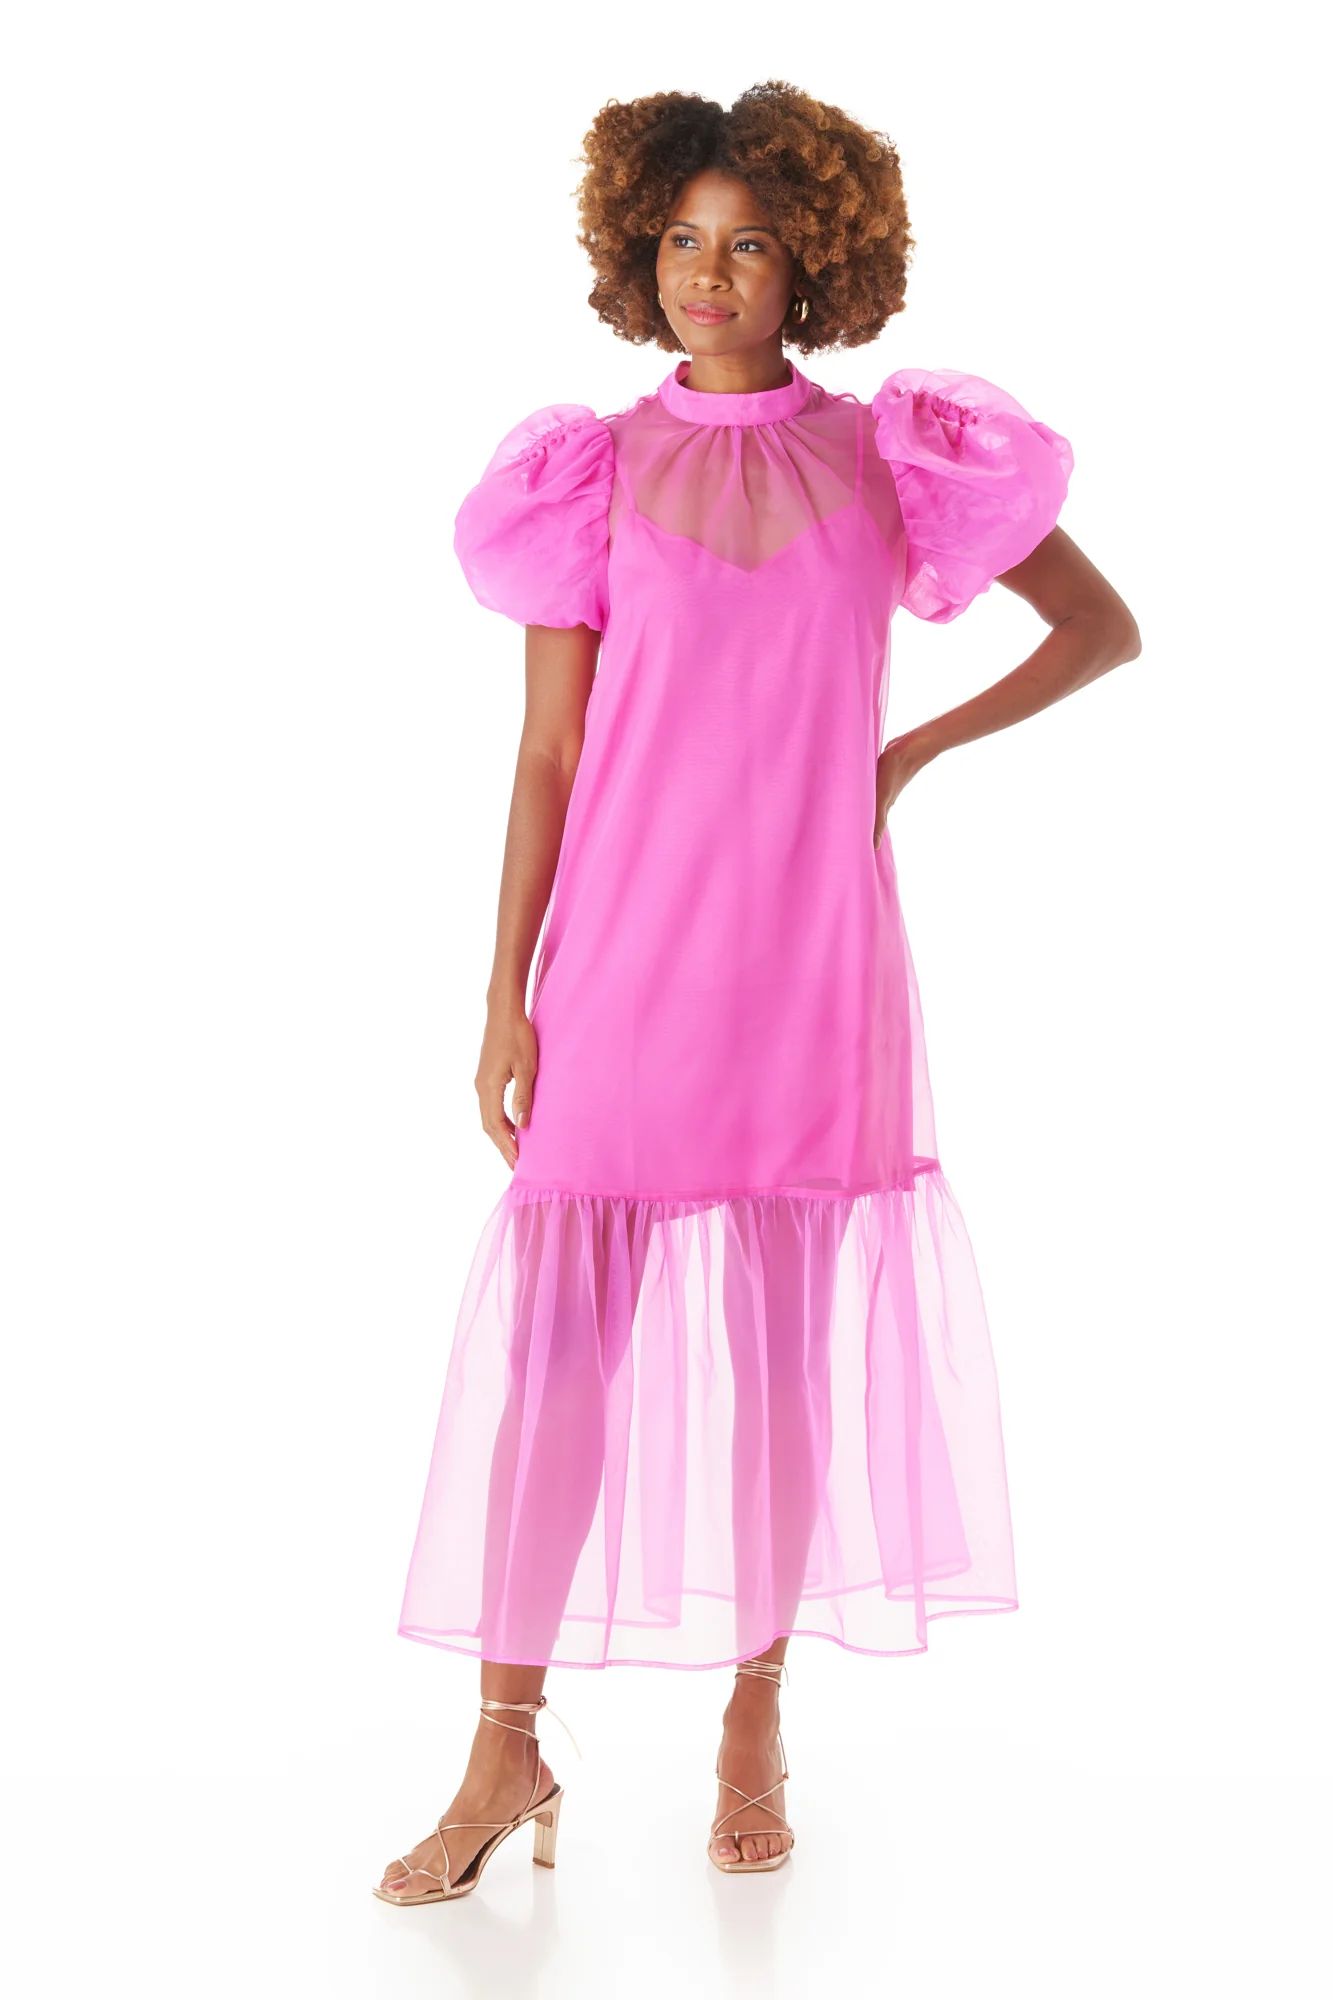 Loretta Dress in Mollie Pink | CROSBY by Mollie Burch | CROSBY by Mollie Burch